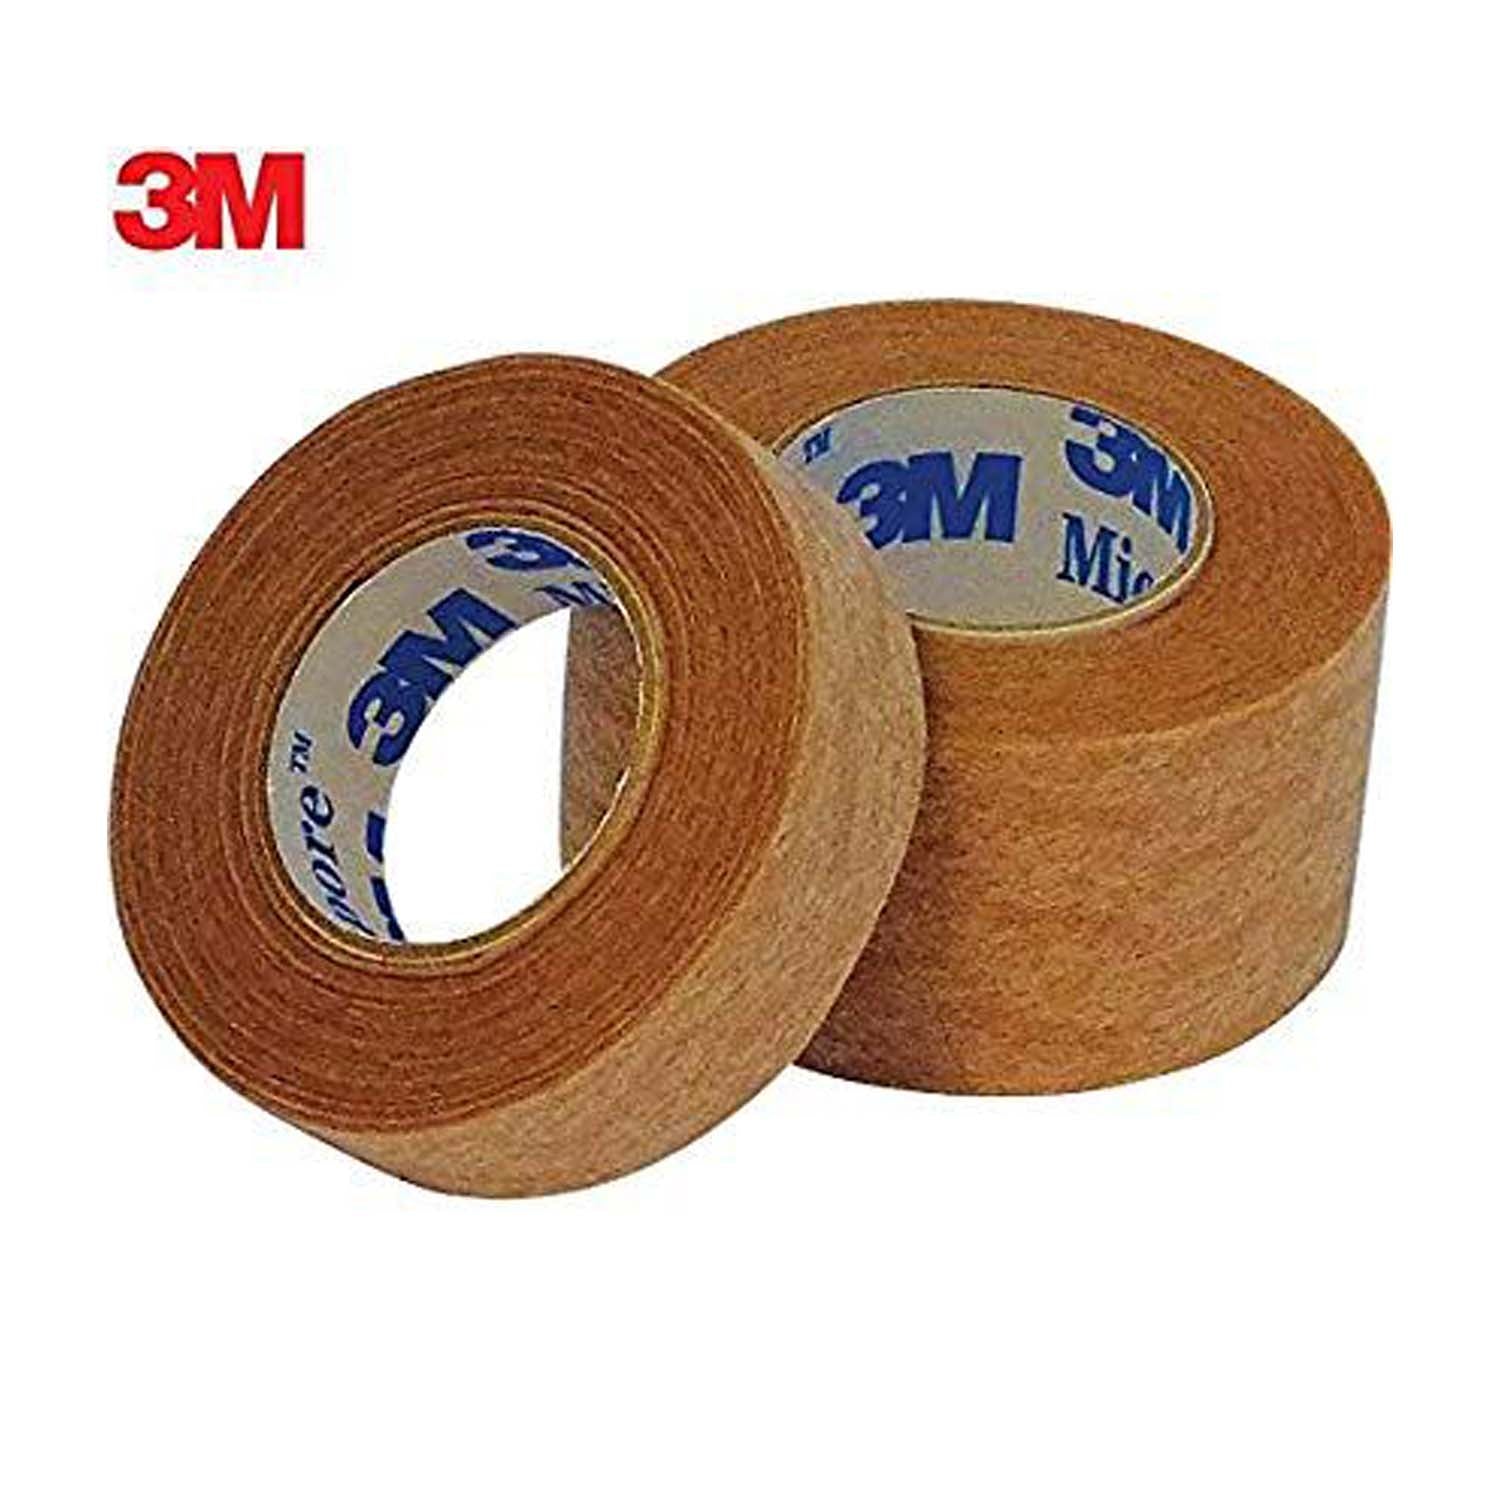 3M Micropore Skin Tape | 1.25cm x 9m Tan | Pack of 240